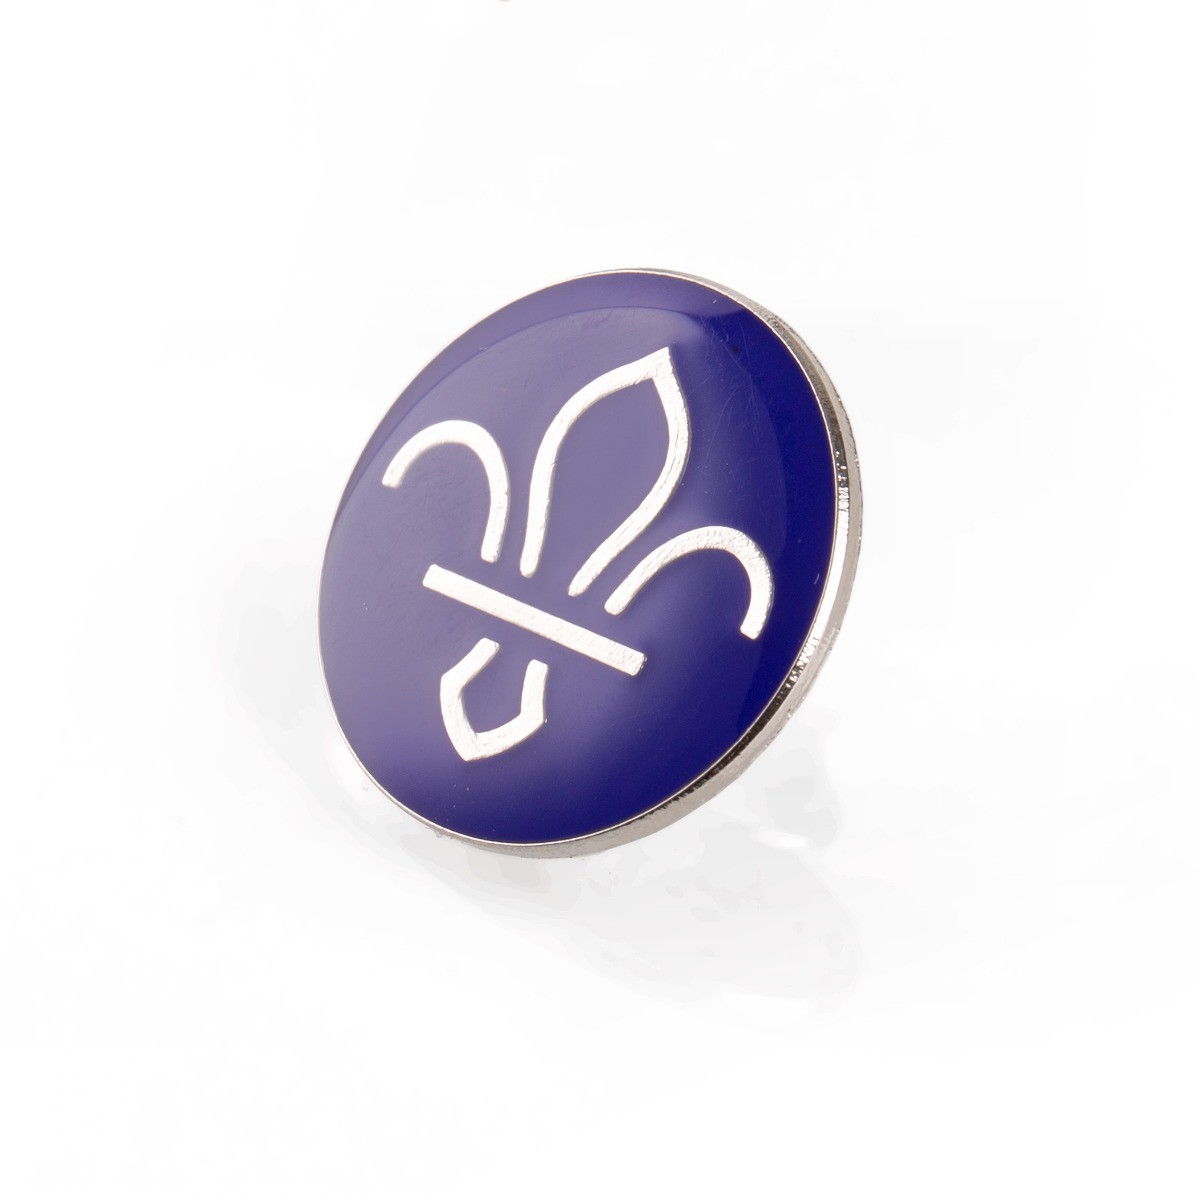 FDL Fleur de Lis Pin Badge